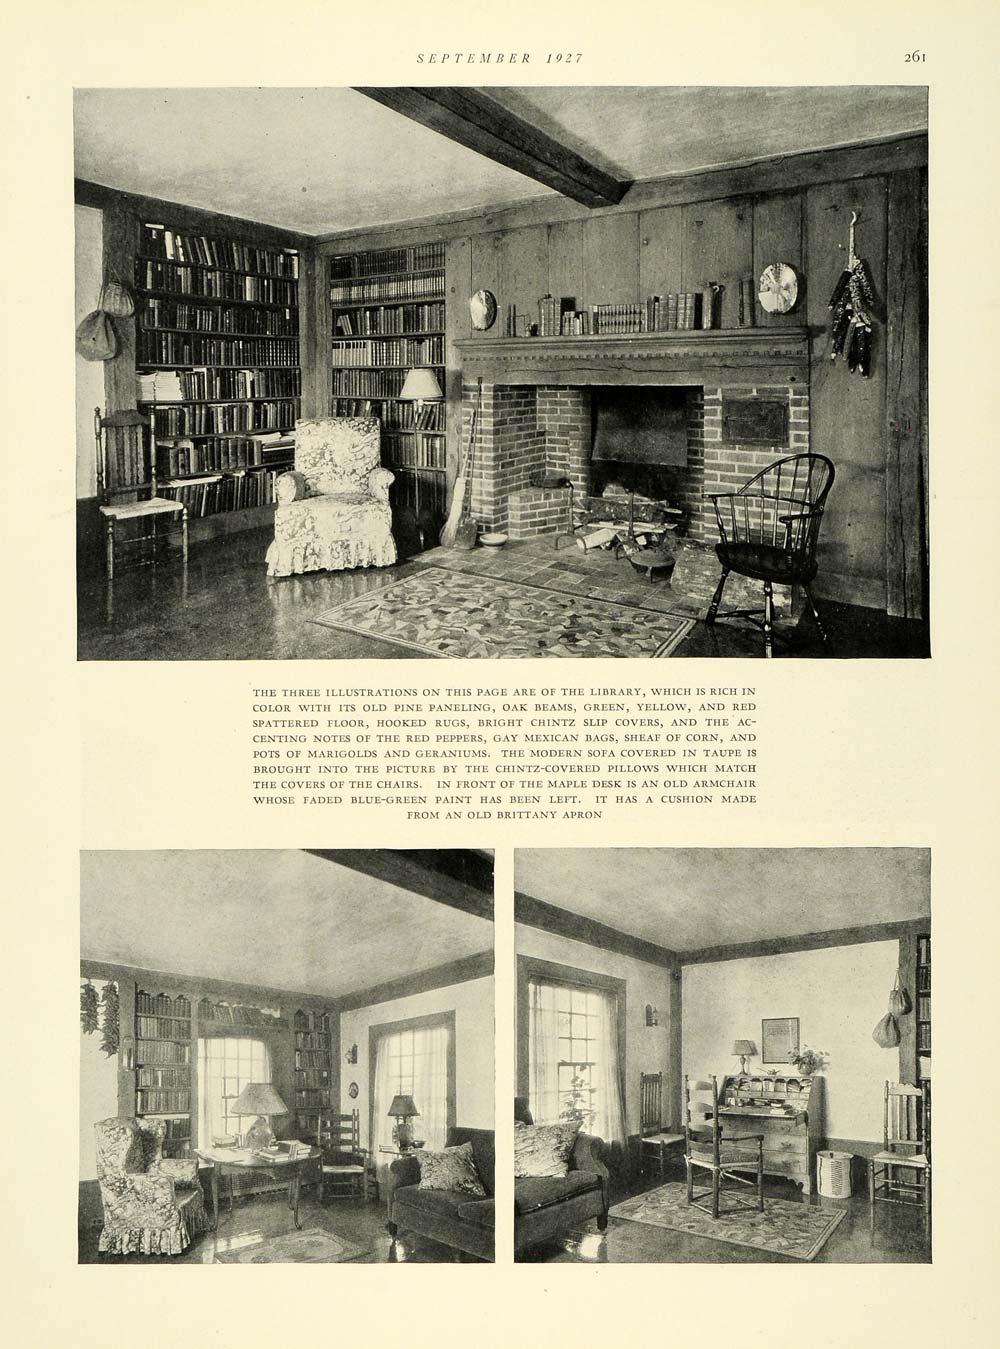 1927 Article Leslie D. Hawkridge Home Massachusetts - ORIGINAL THB1